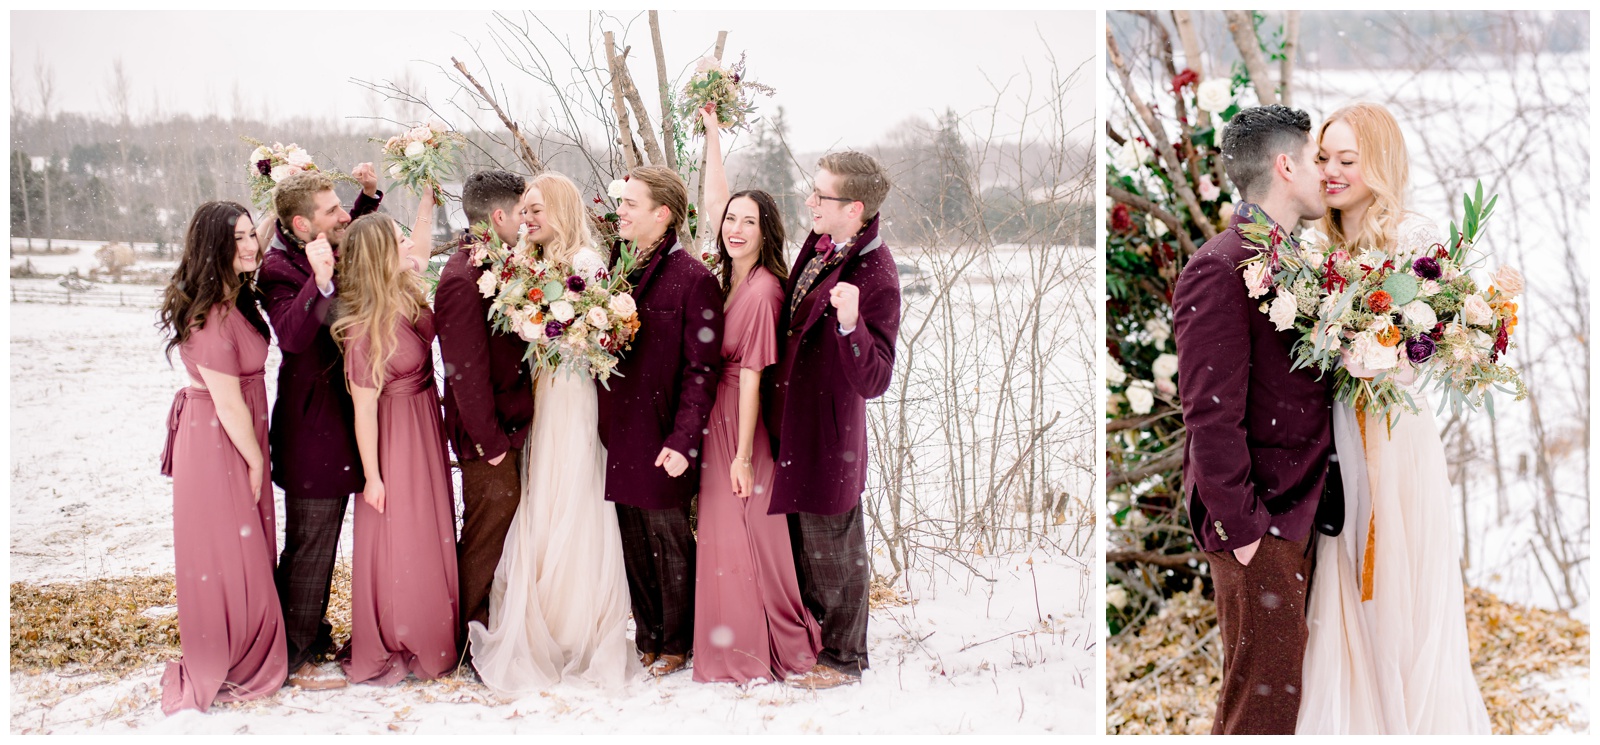 enchanted barn wedding hillsdale wisconsin photographer meghan lee harris outdoor winter ceremony